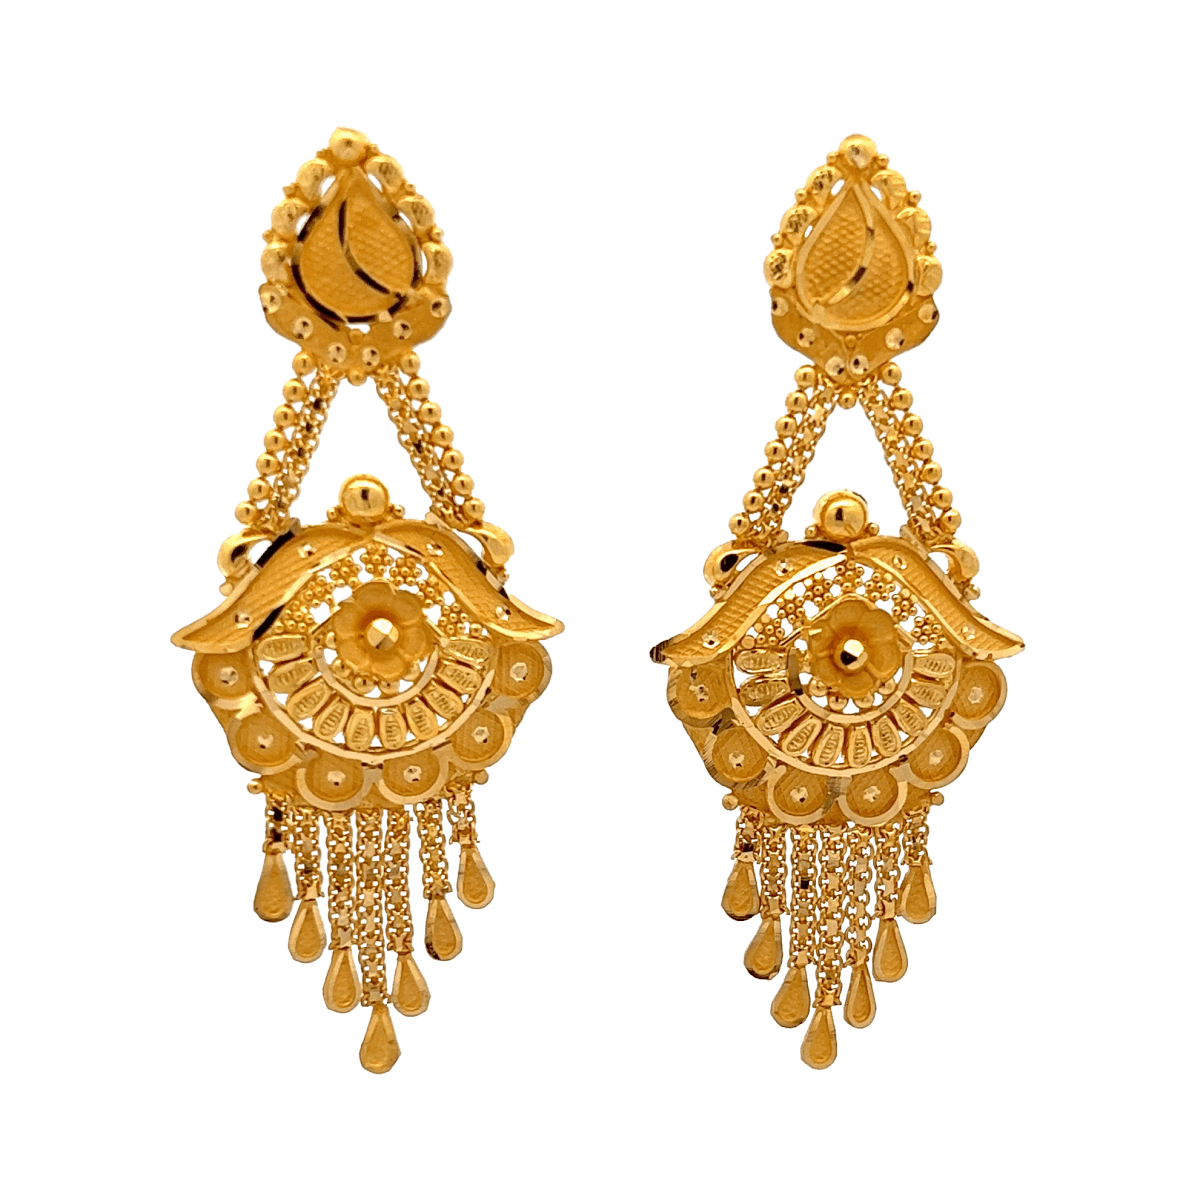 22K Gold Jhumkas (Buttalu) - Gold Dangle Earrings with Beads (Temple  Jewellery) - 235-GJH2580 in 22.150 Grams